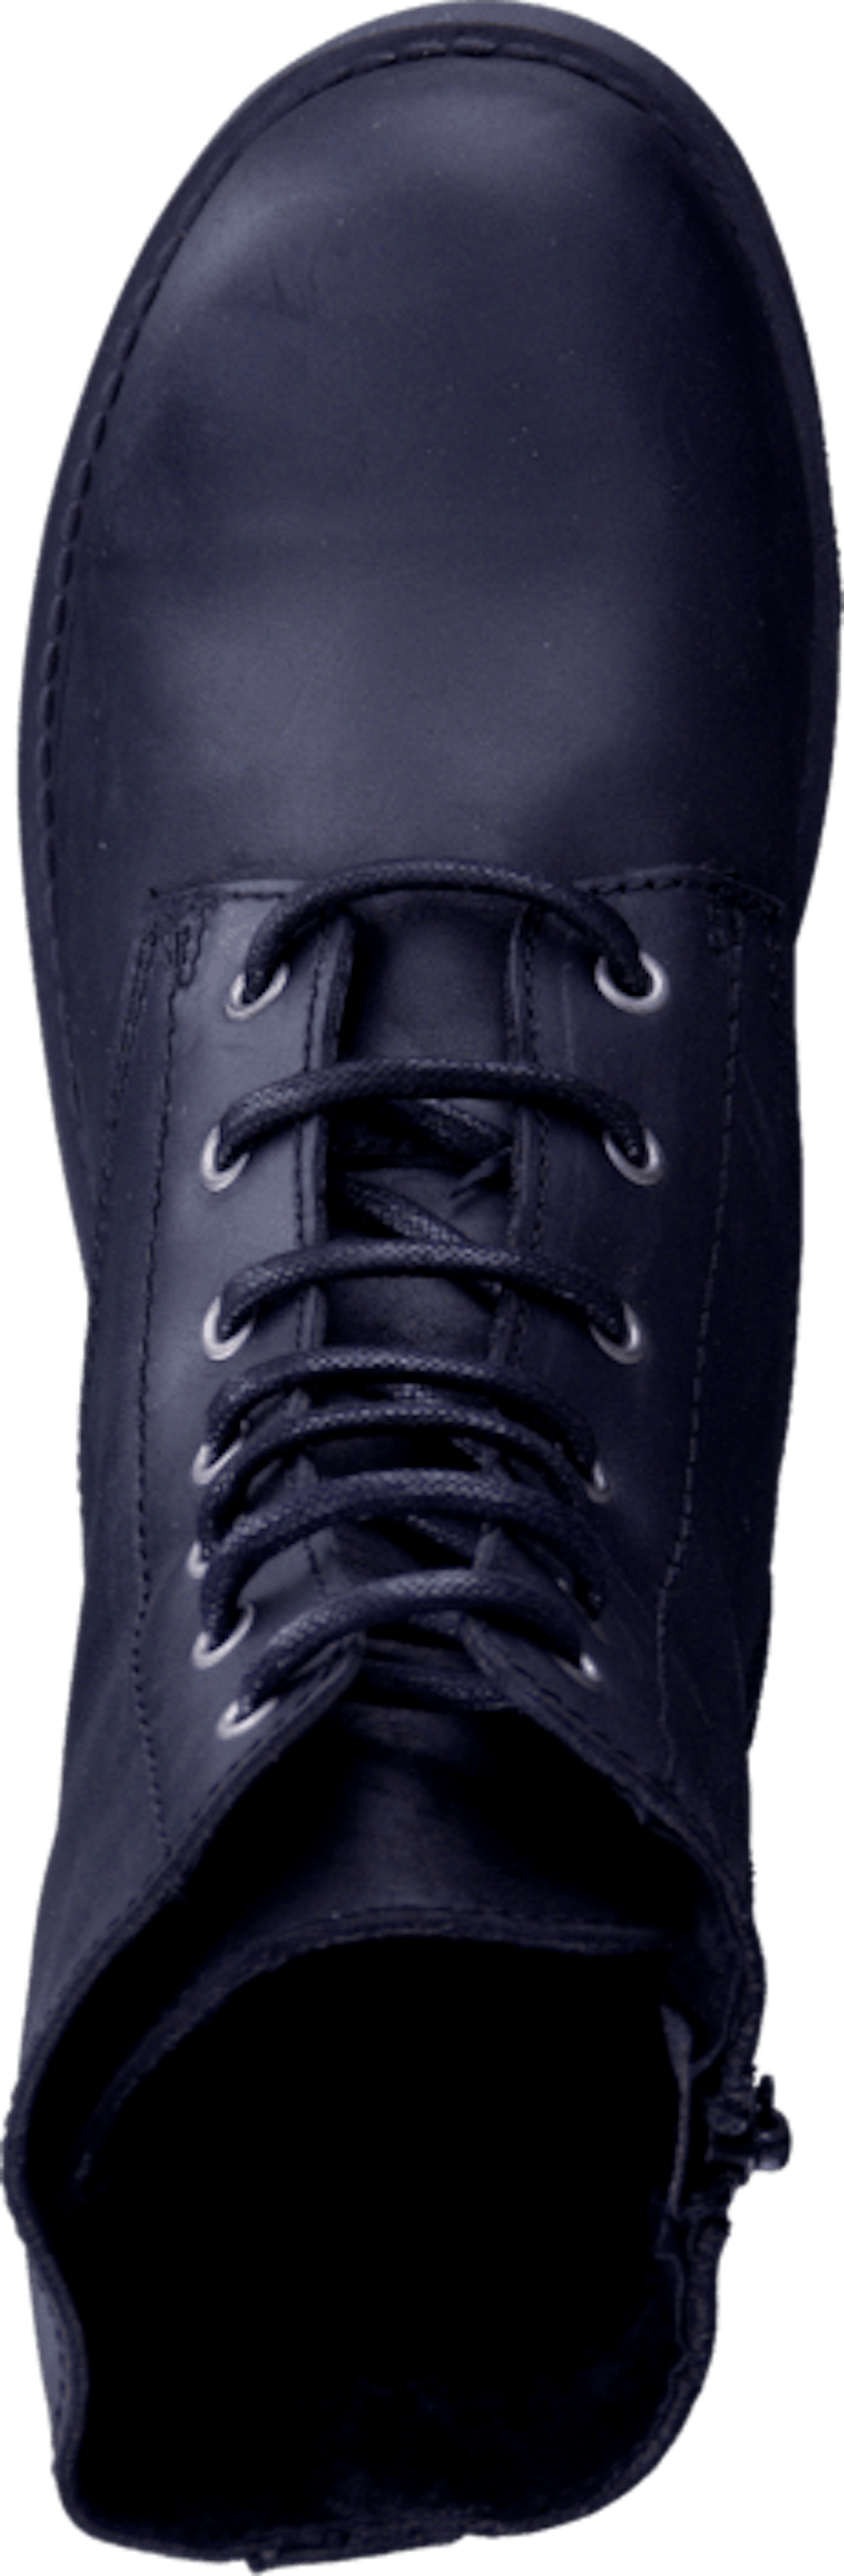 Boots 495-9575 Black